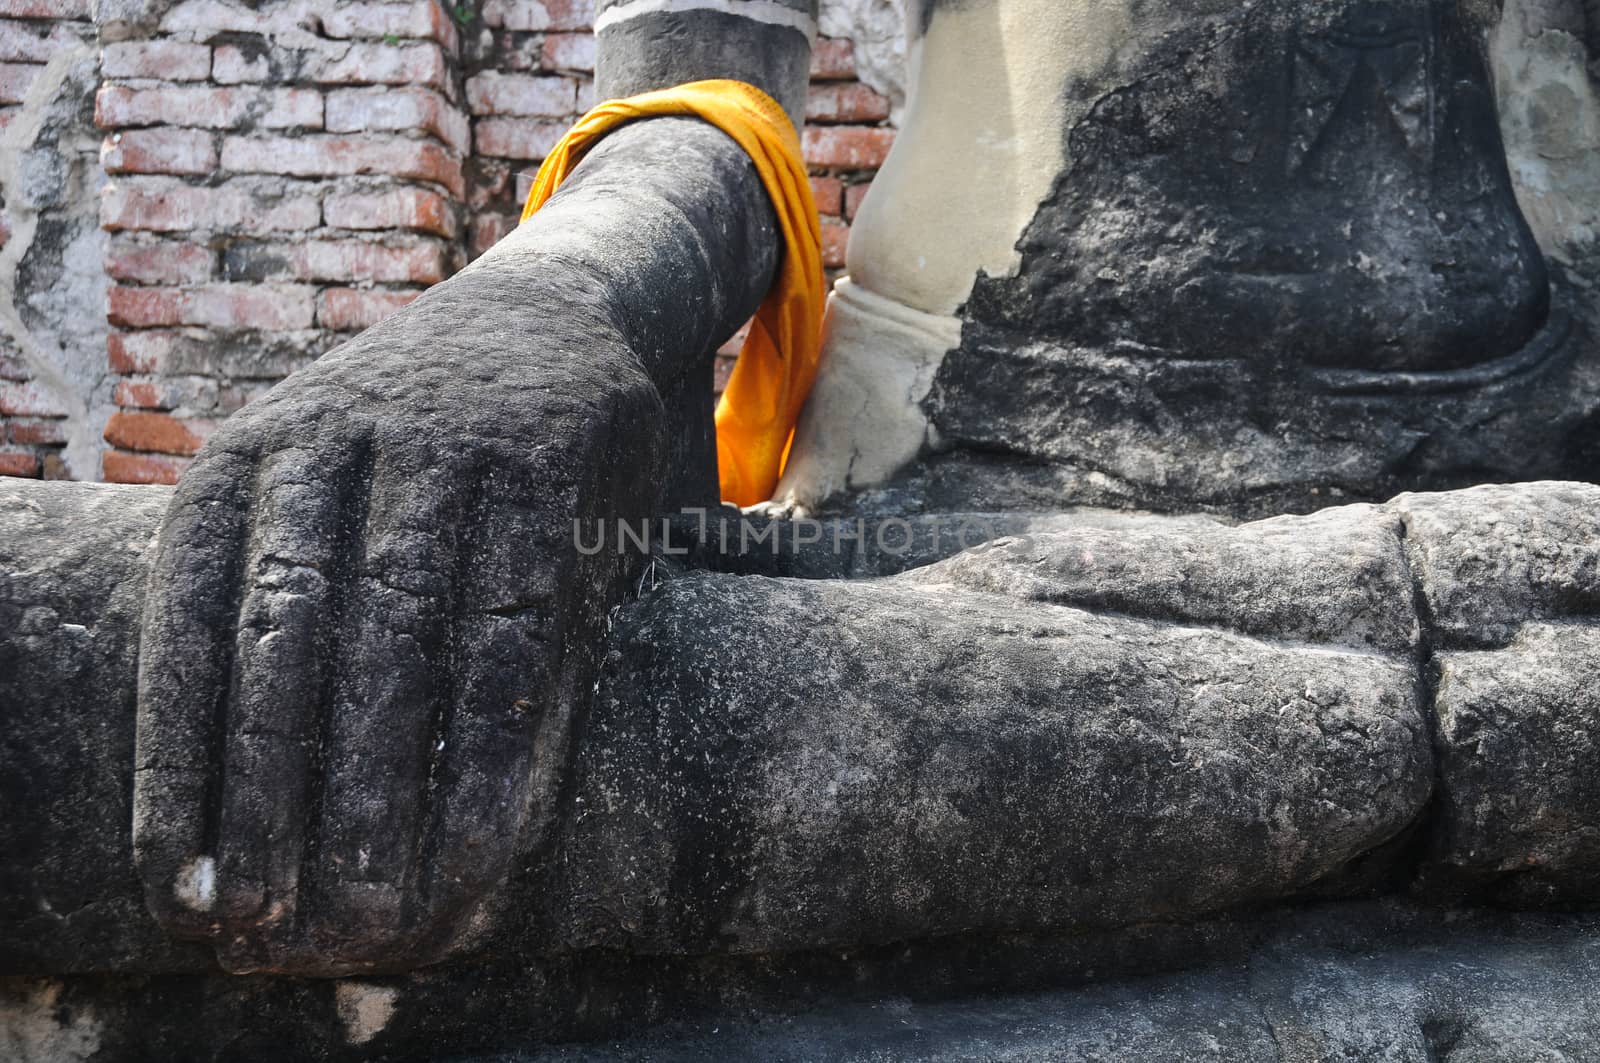 Mercy hand of ancient Buddha statue by eyeofpaul